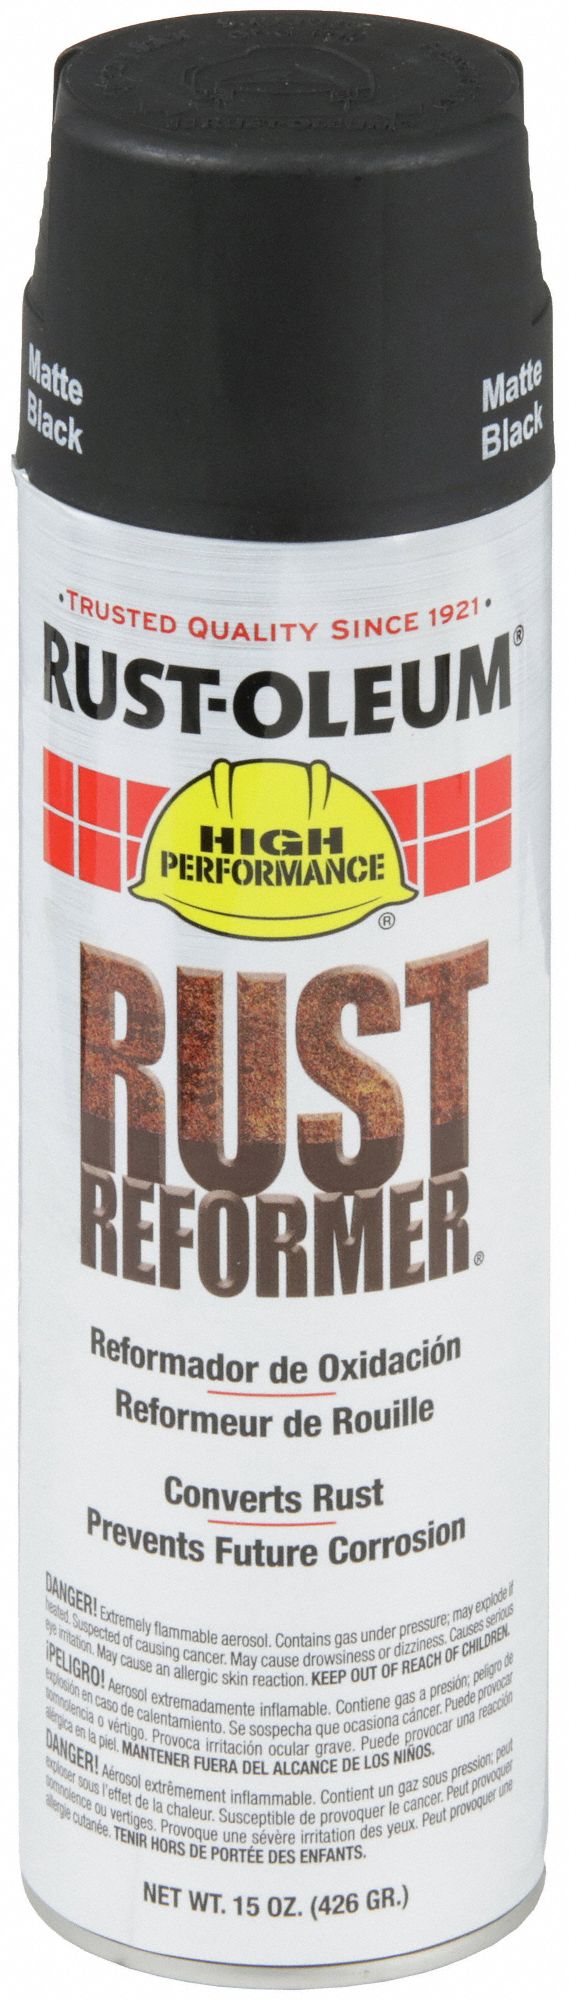 RUST-OLEUM Rust Converter: Rust Reformer, Black, Metal, Solvent, Oil  Modified Alkyd, Flat, Black